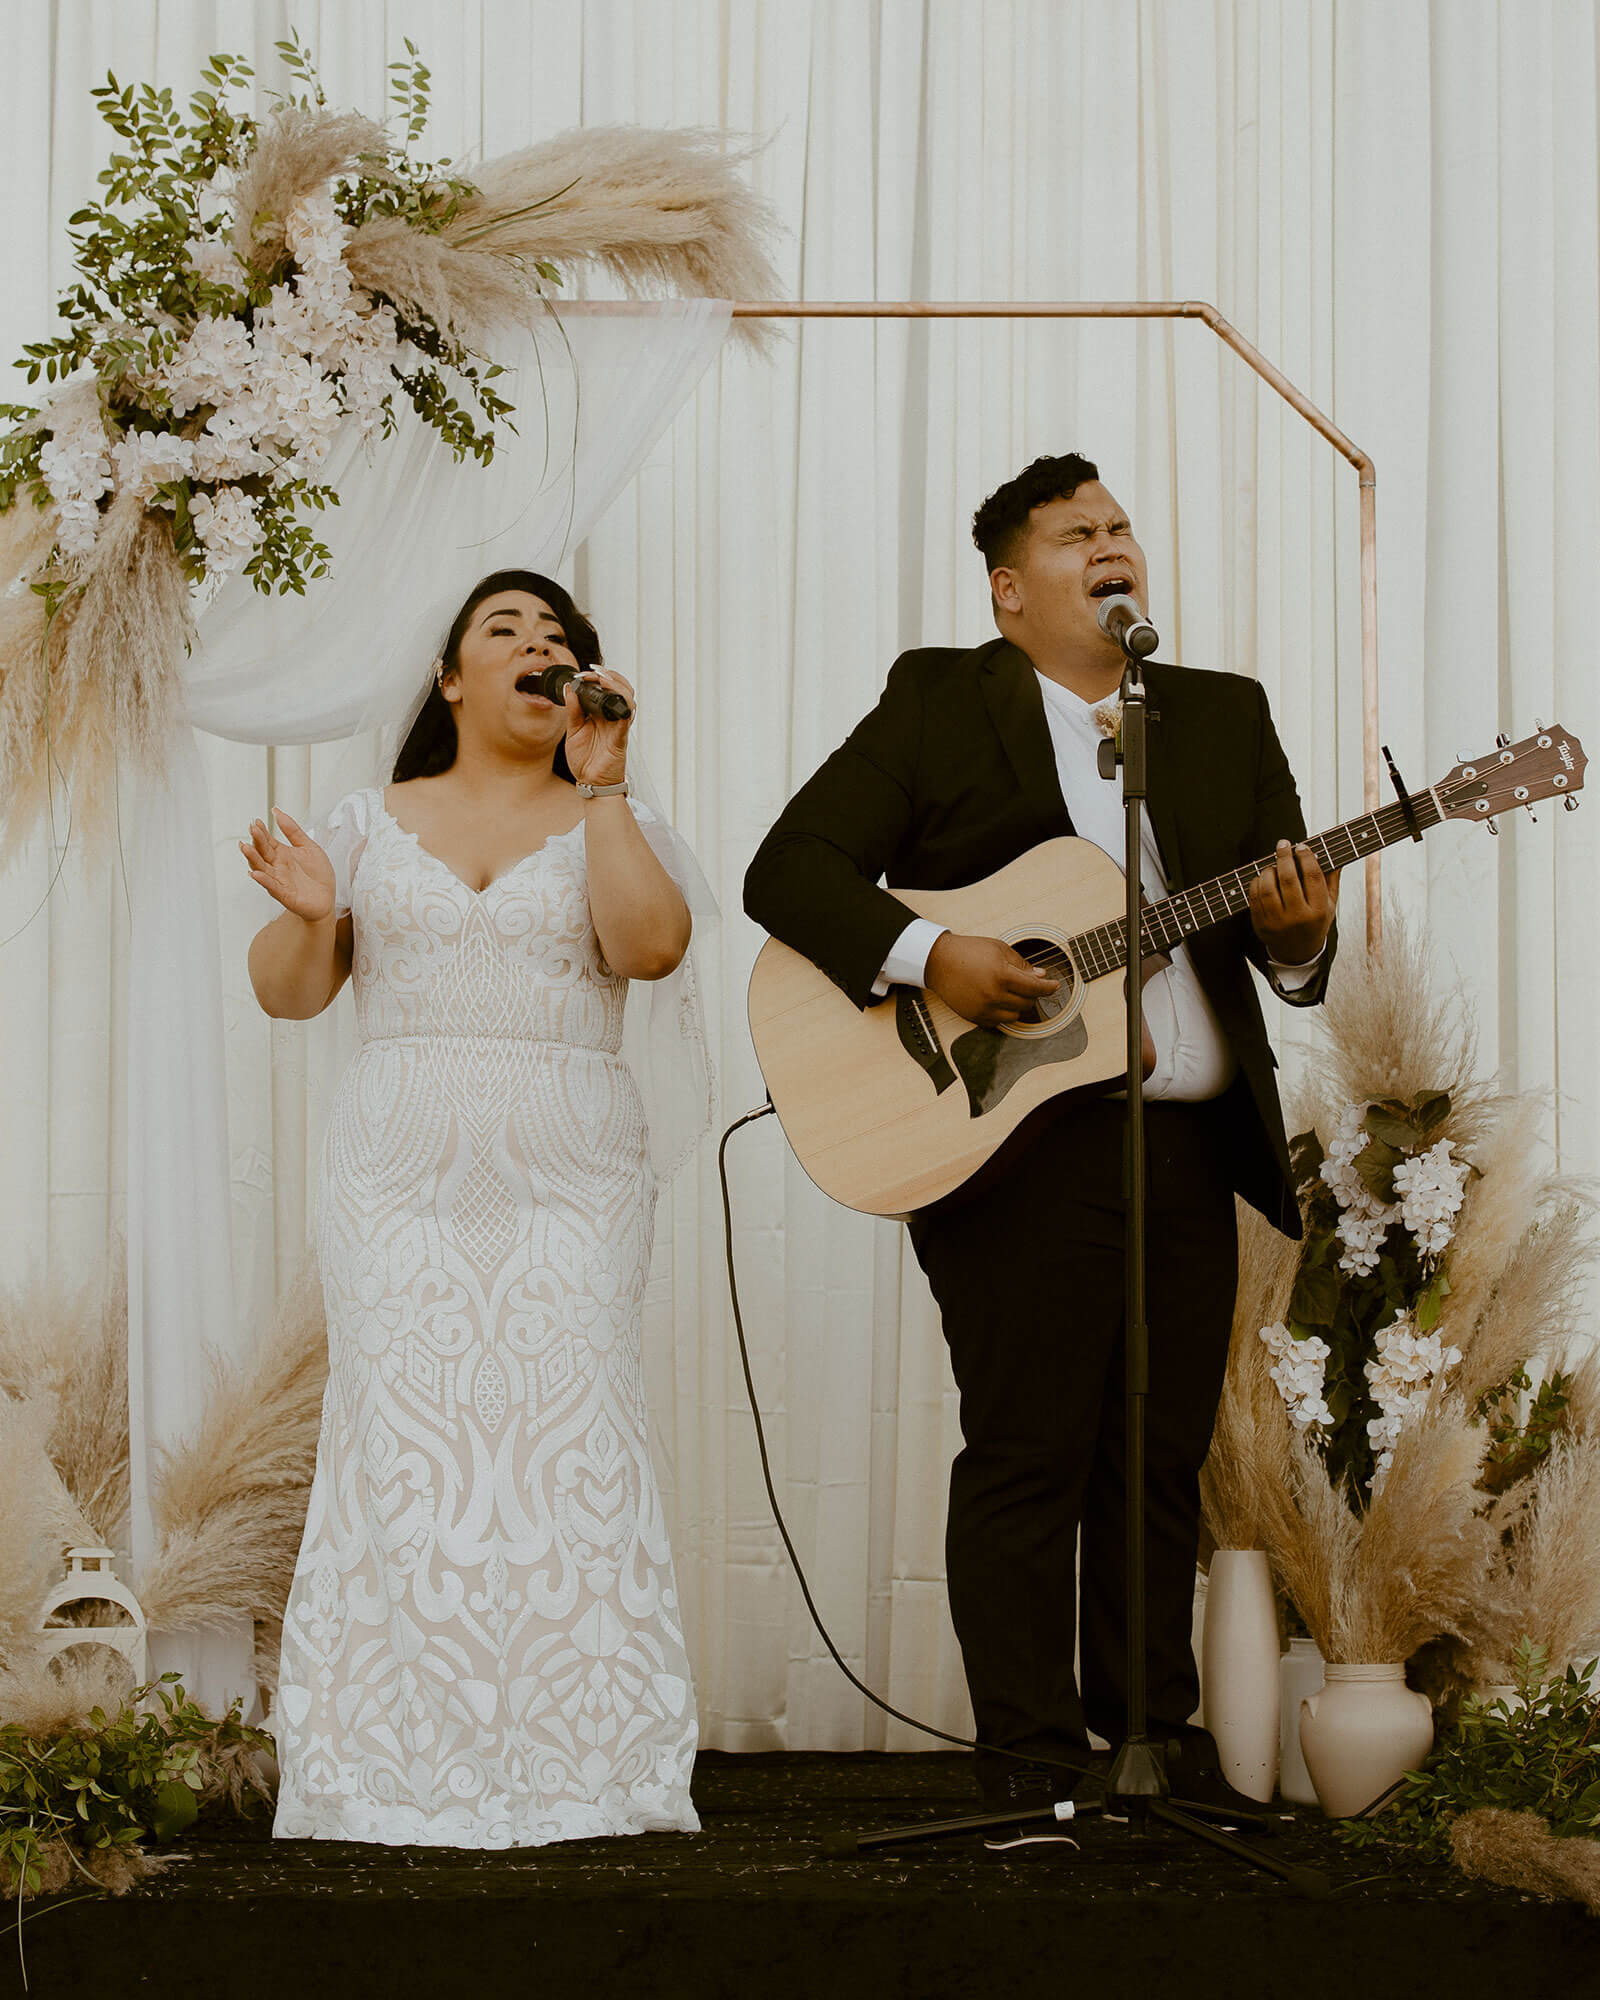 5 things every wedding needs - Music